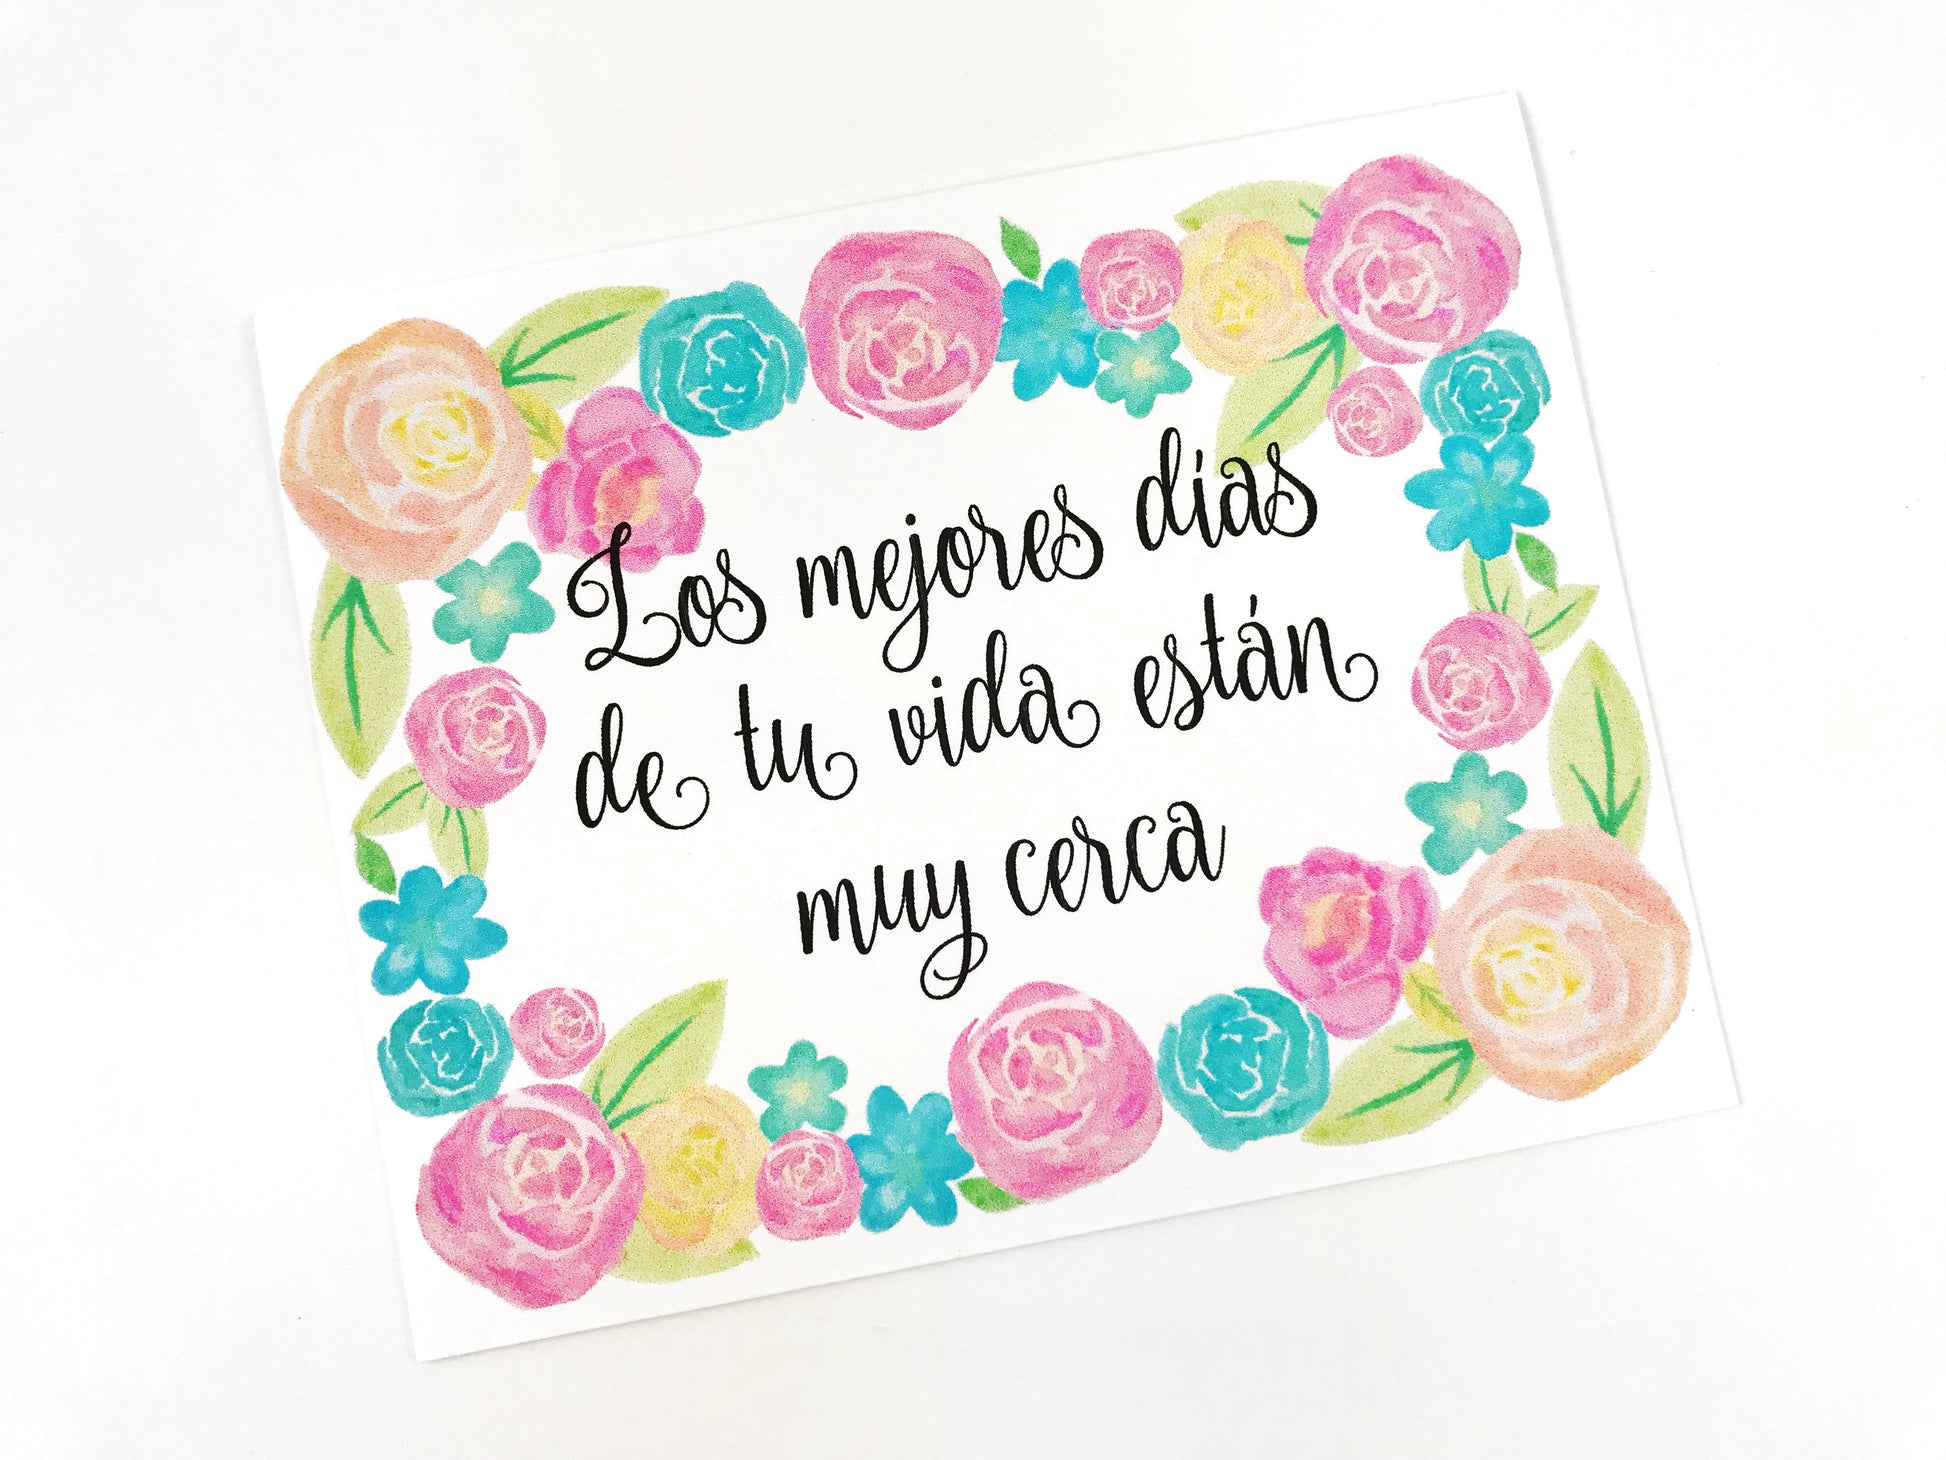 Just around the corner JW encouragement card in Spanish by Olive Branch Design Studio